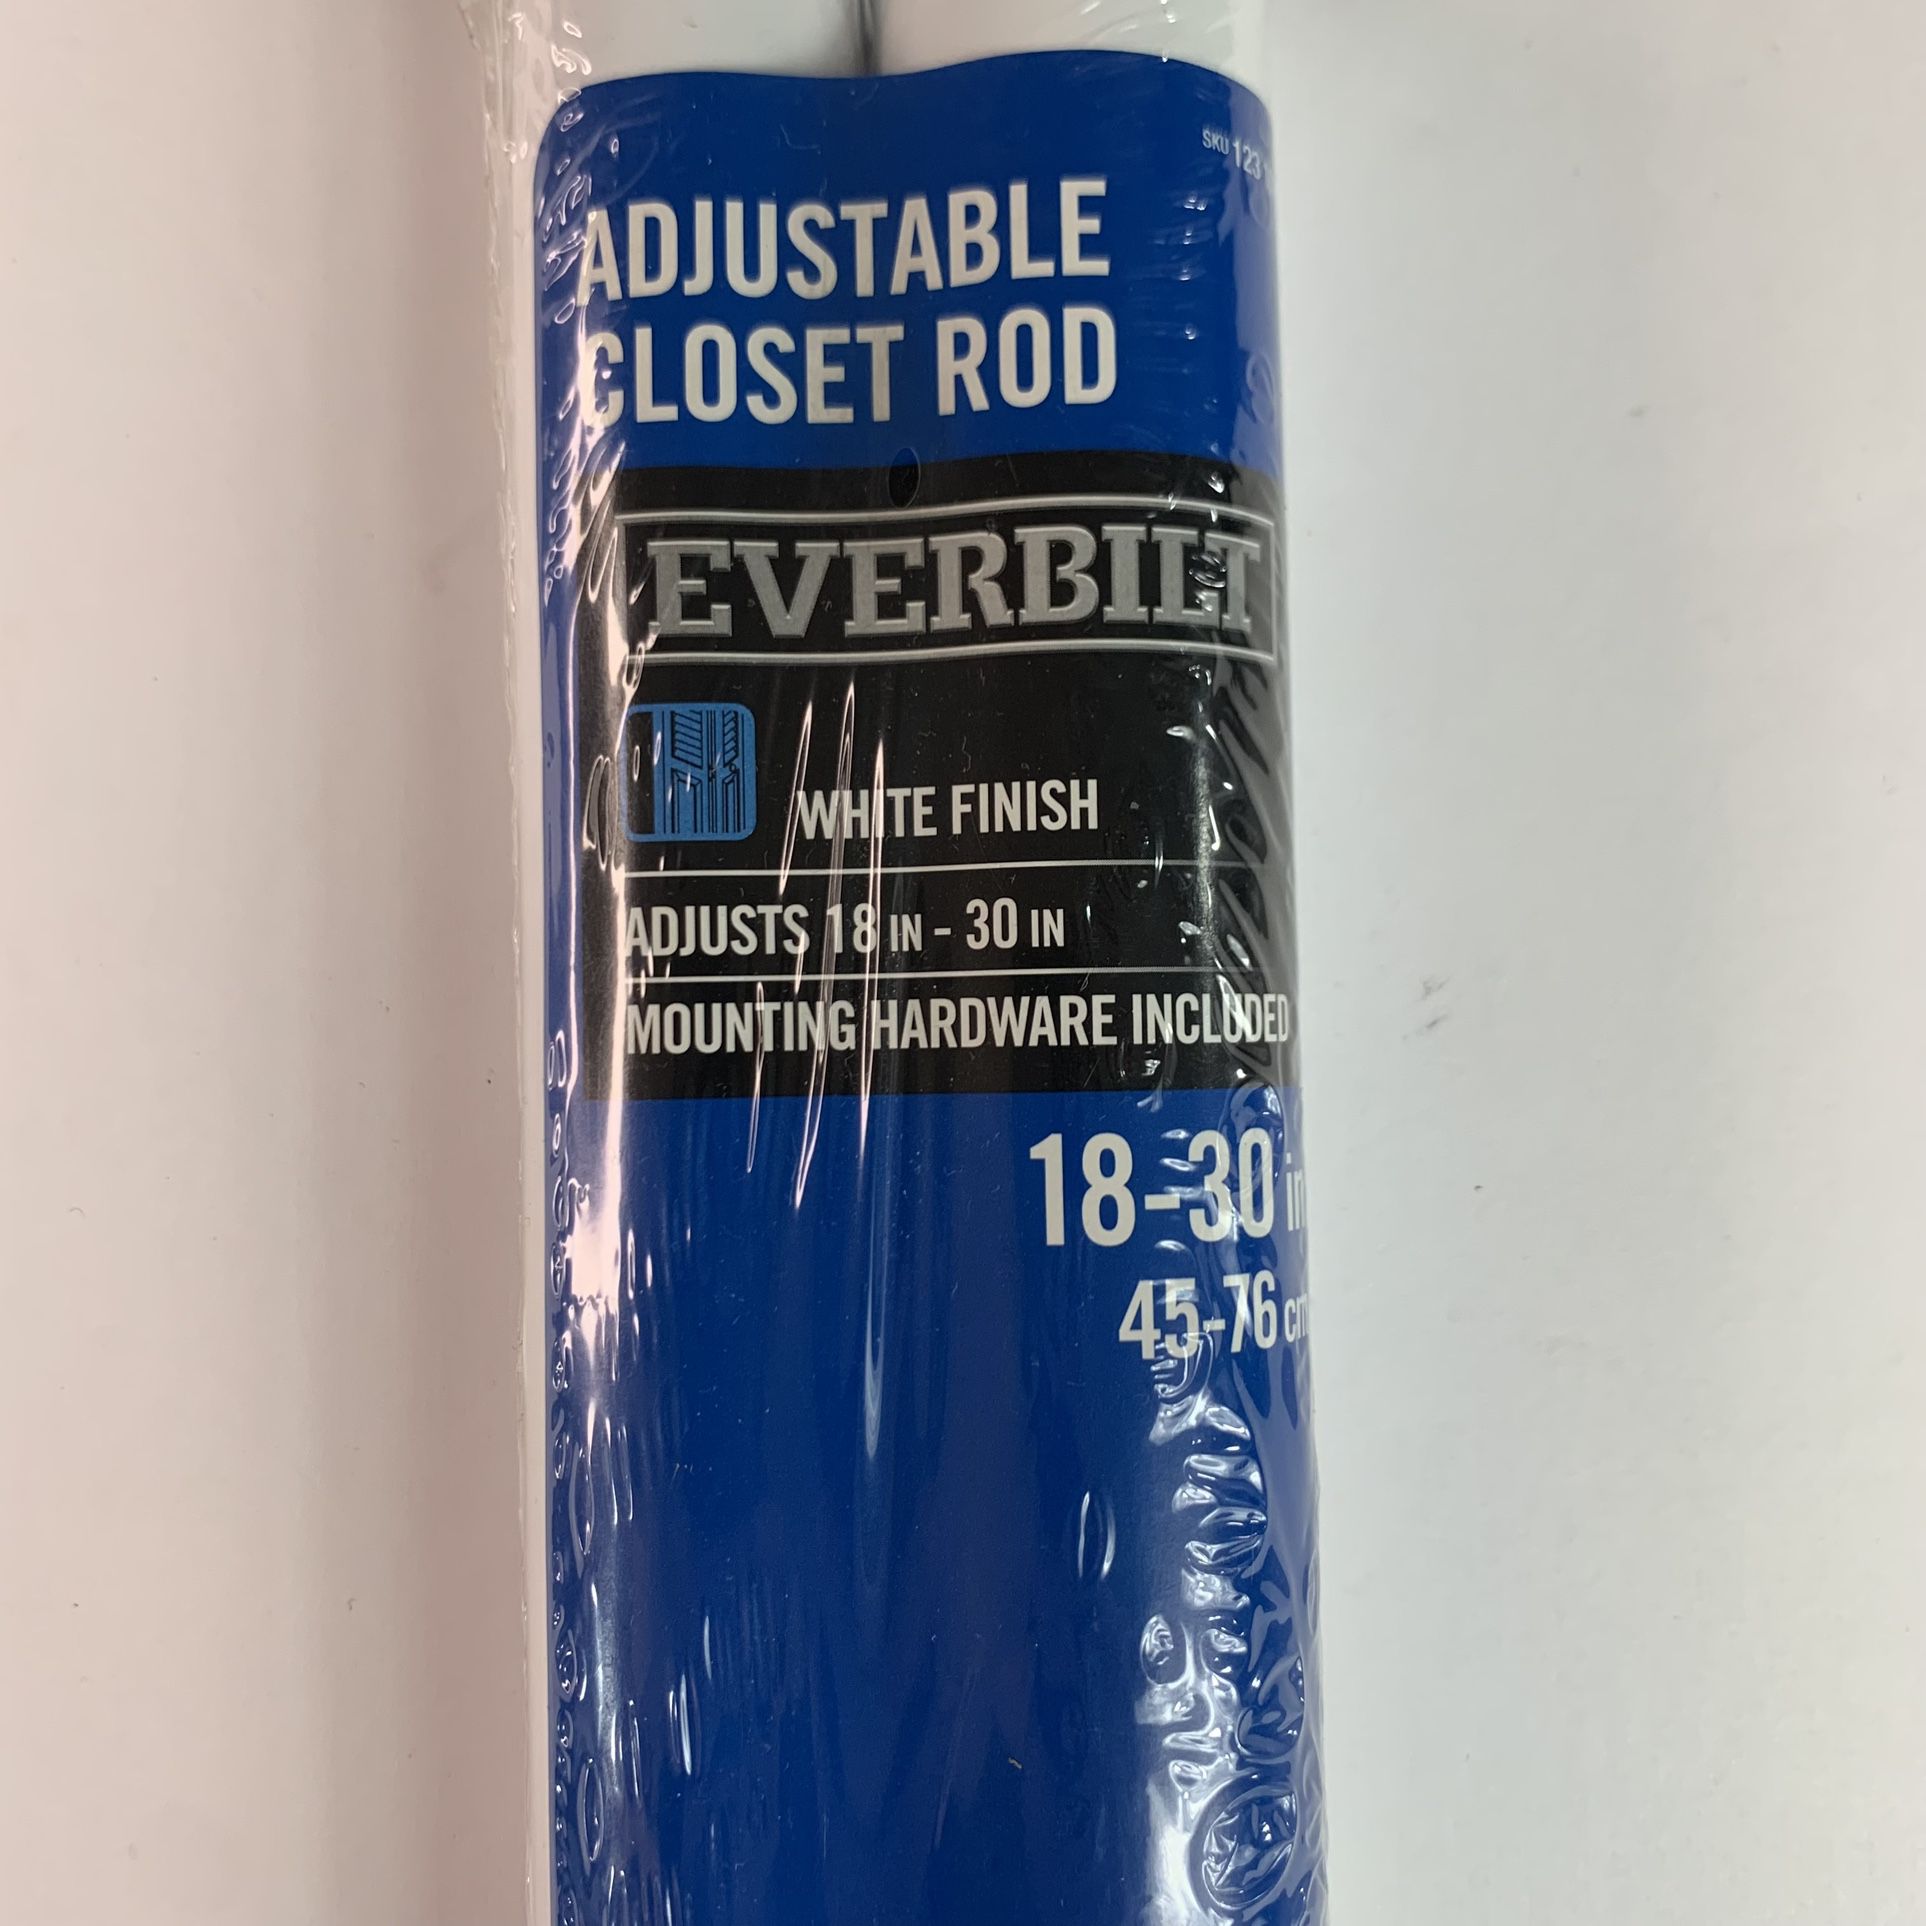 Everbilt Adjustable Closet Rod White - NEW